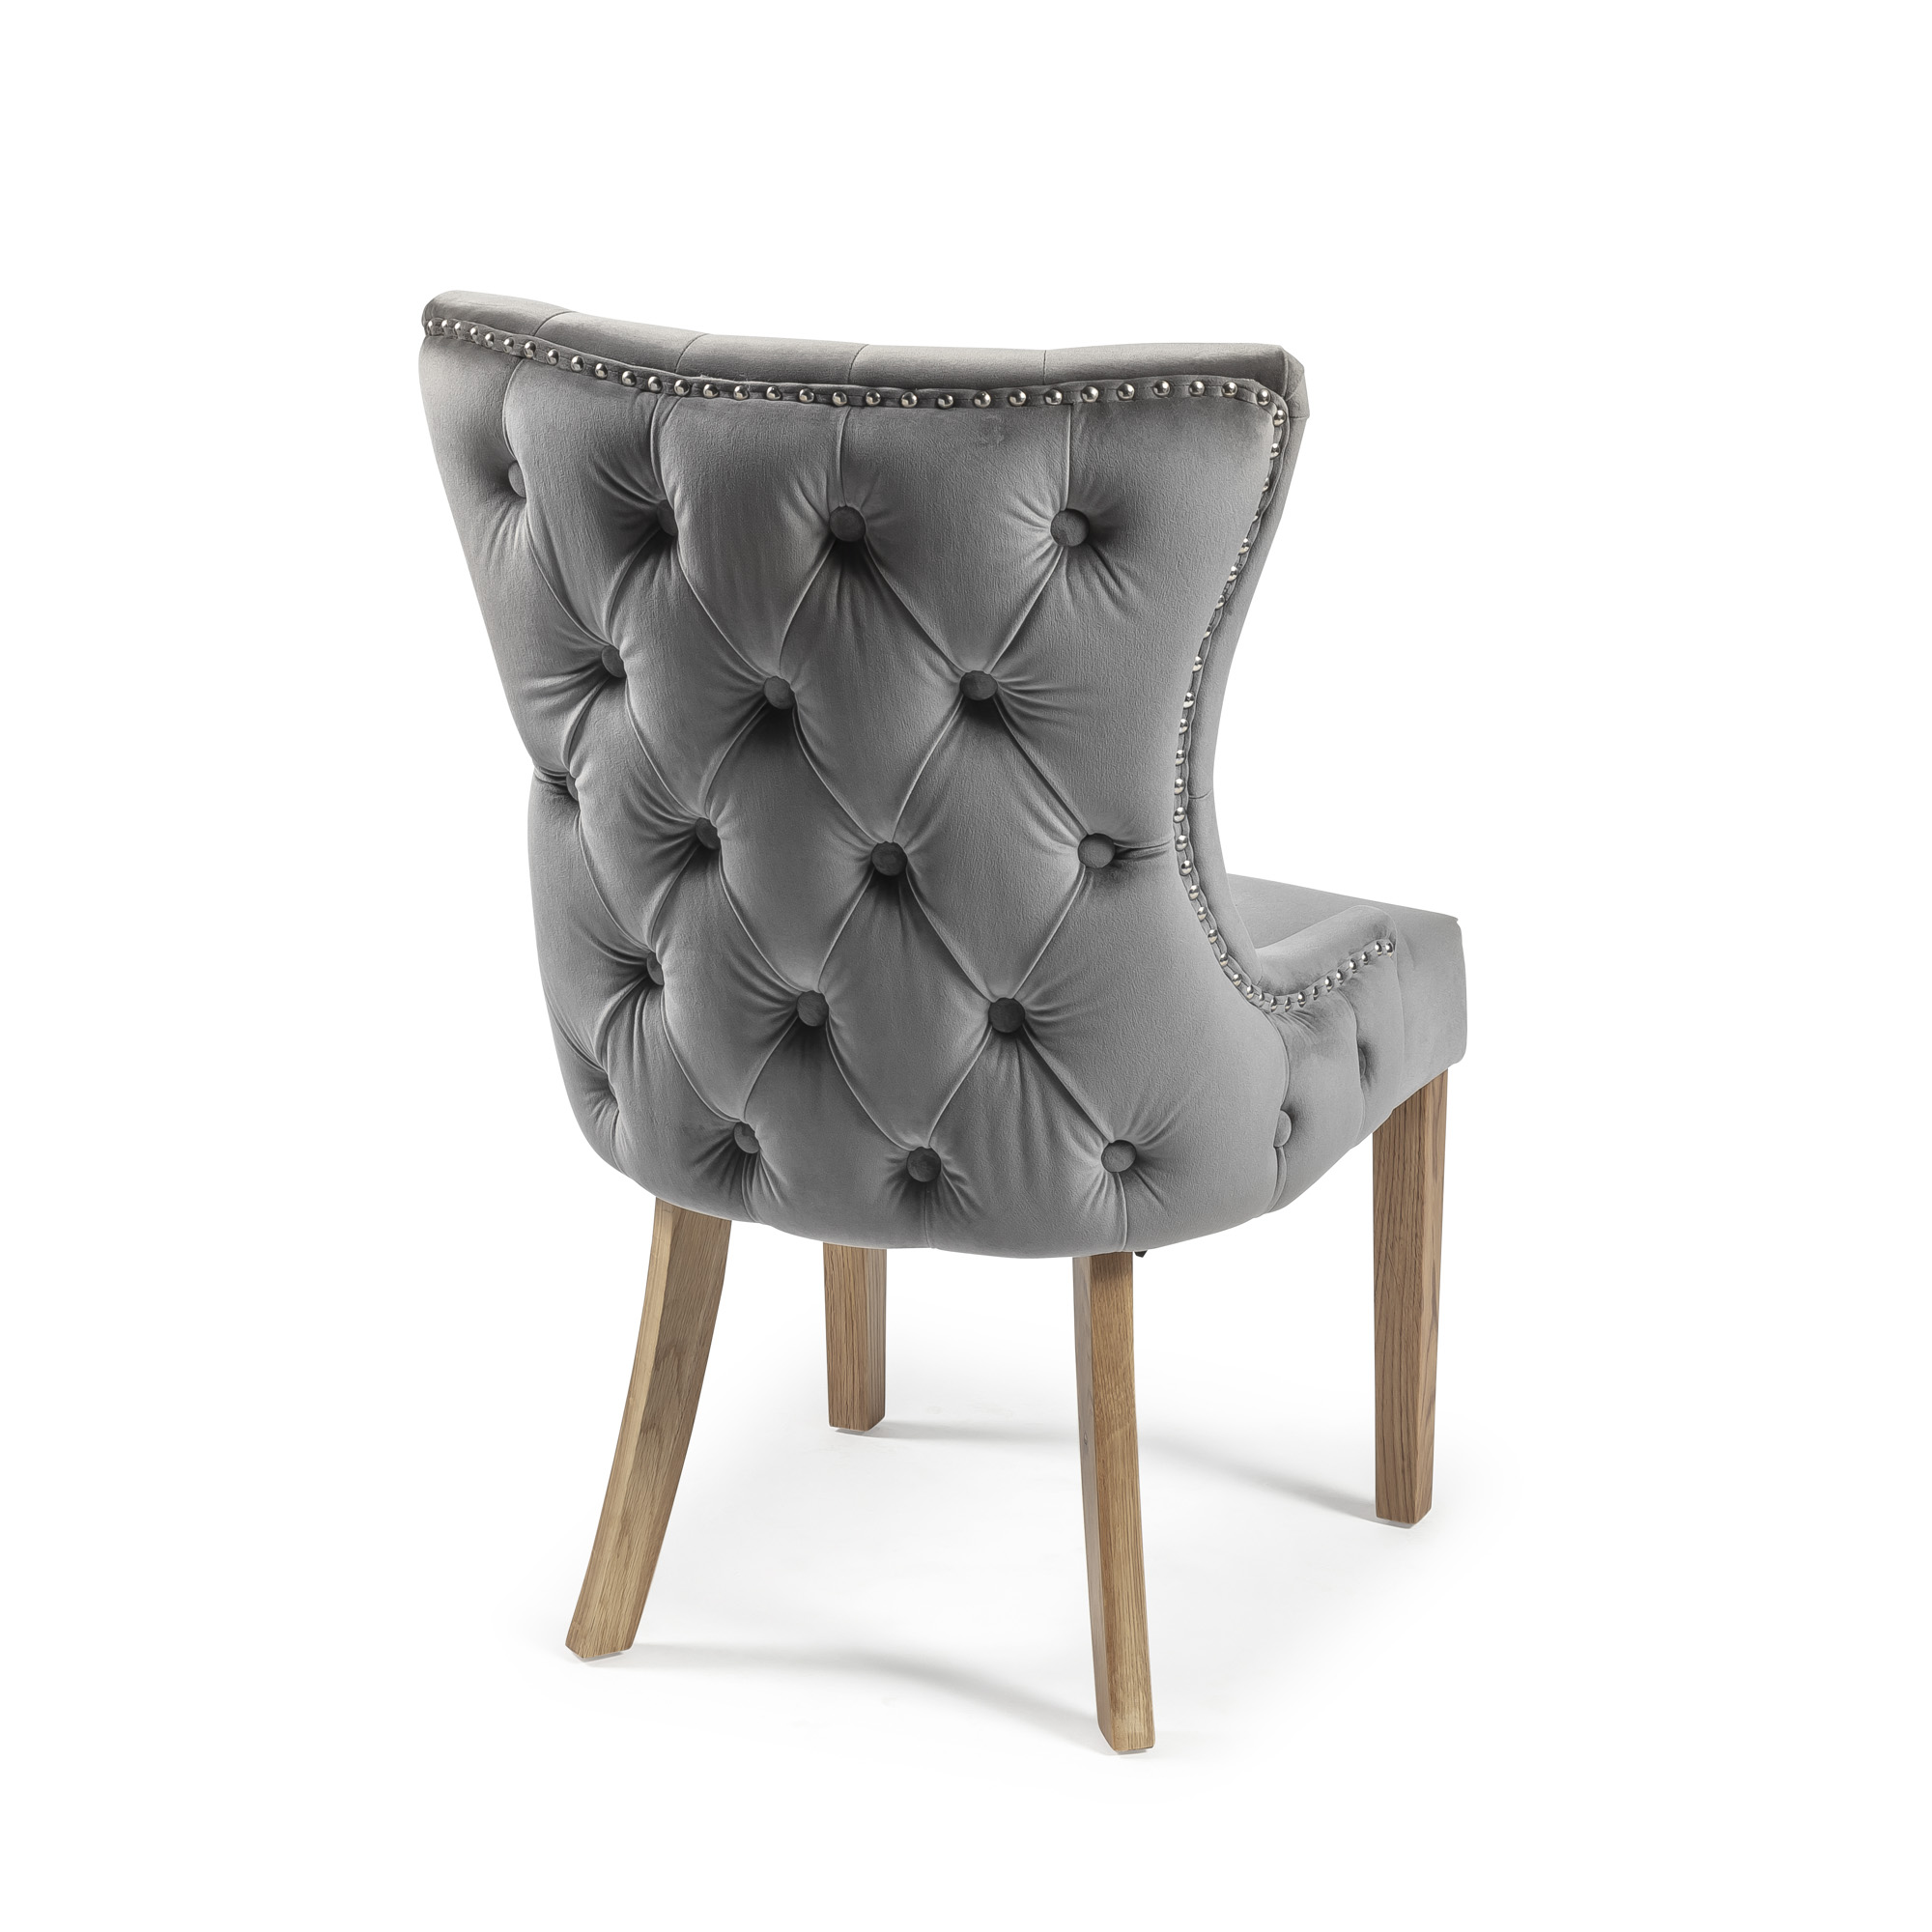 Knightsbridge Grey Velvet Upholstered Dining Room Chair With Button Tufted Detailing – Oak Legs